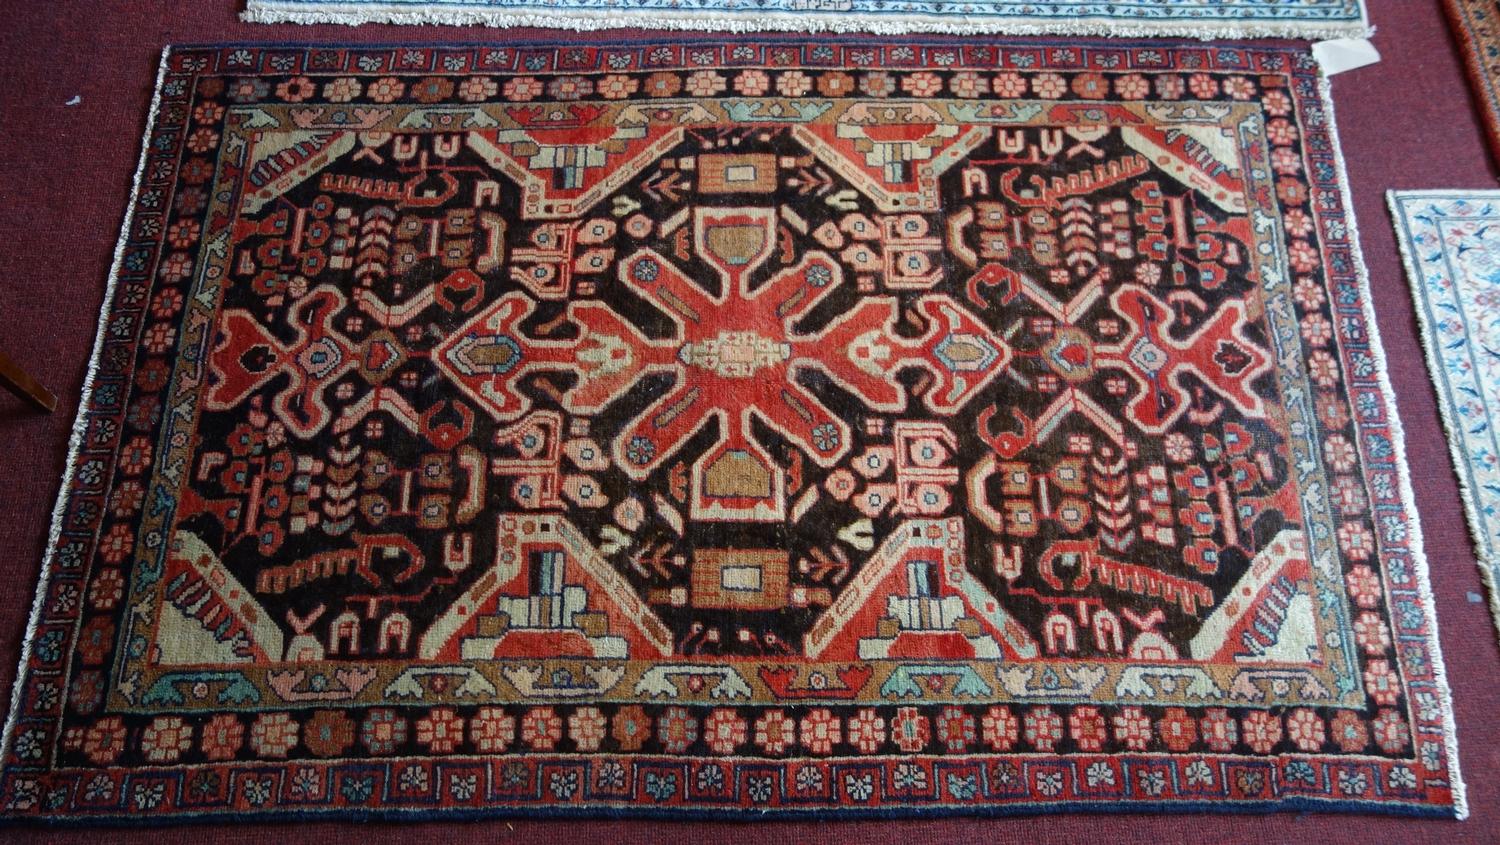 A fine North West Persian Hamadan rug, 201cm X 130cm. Repeating eagle motifs on a midnight field